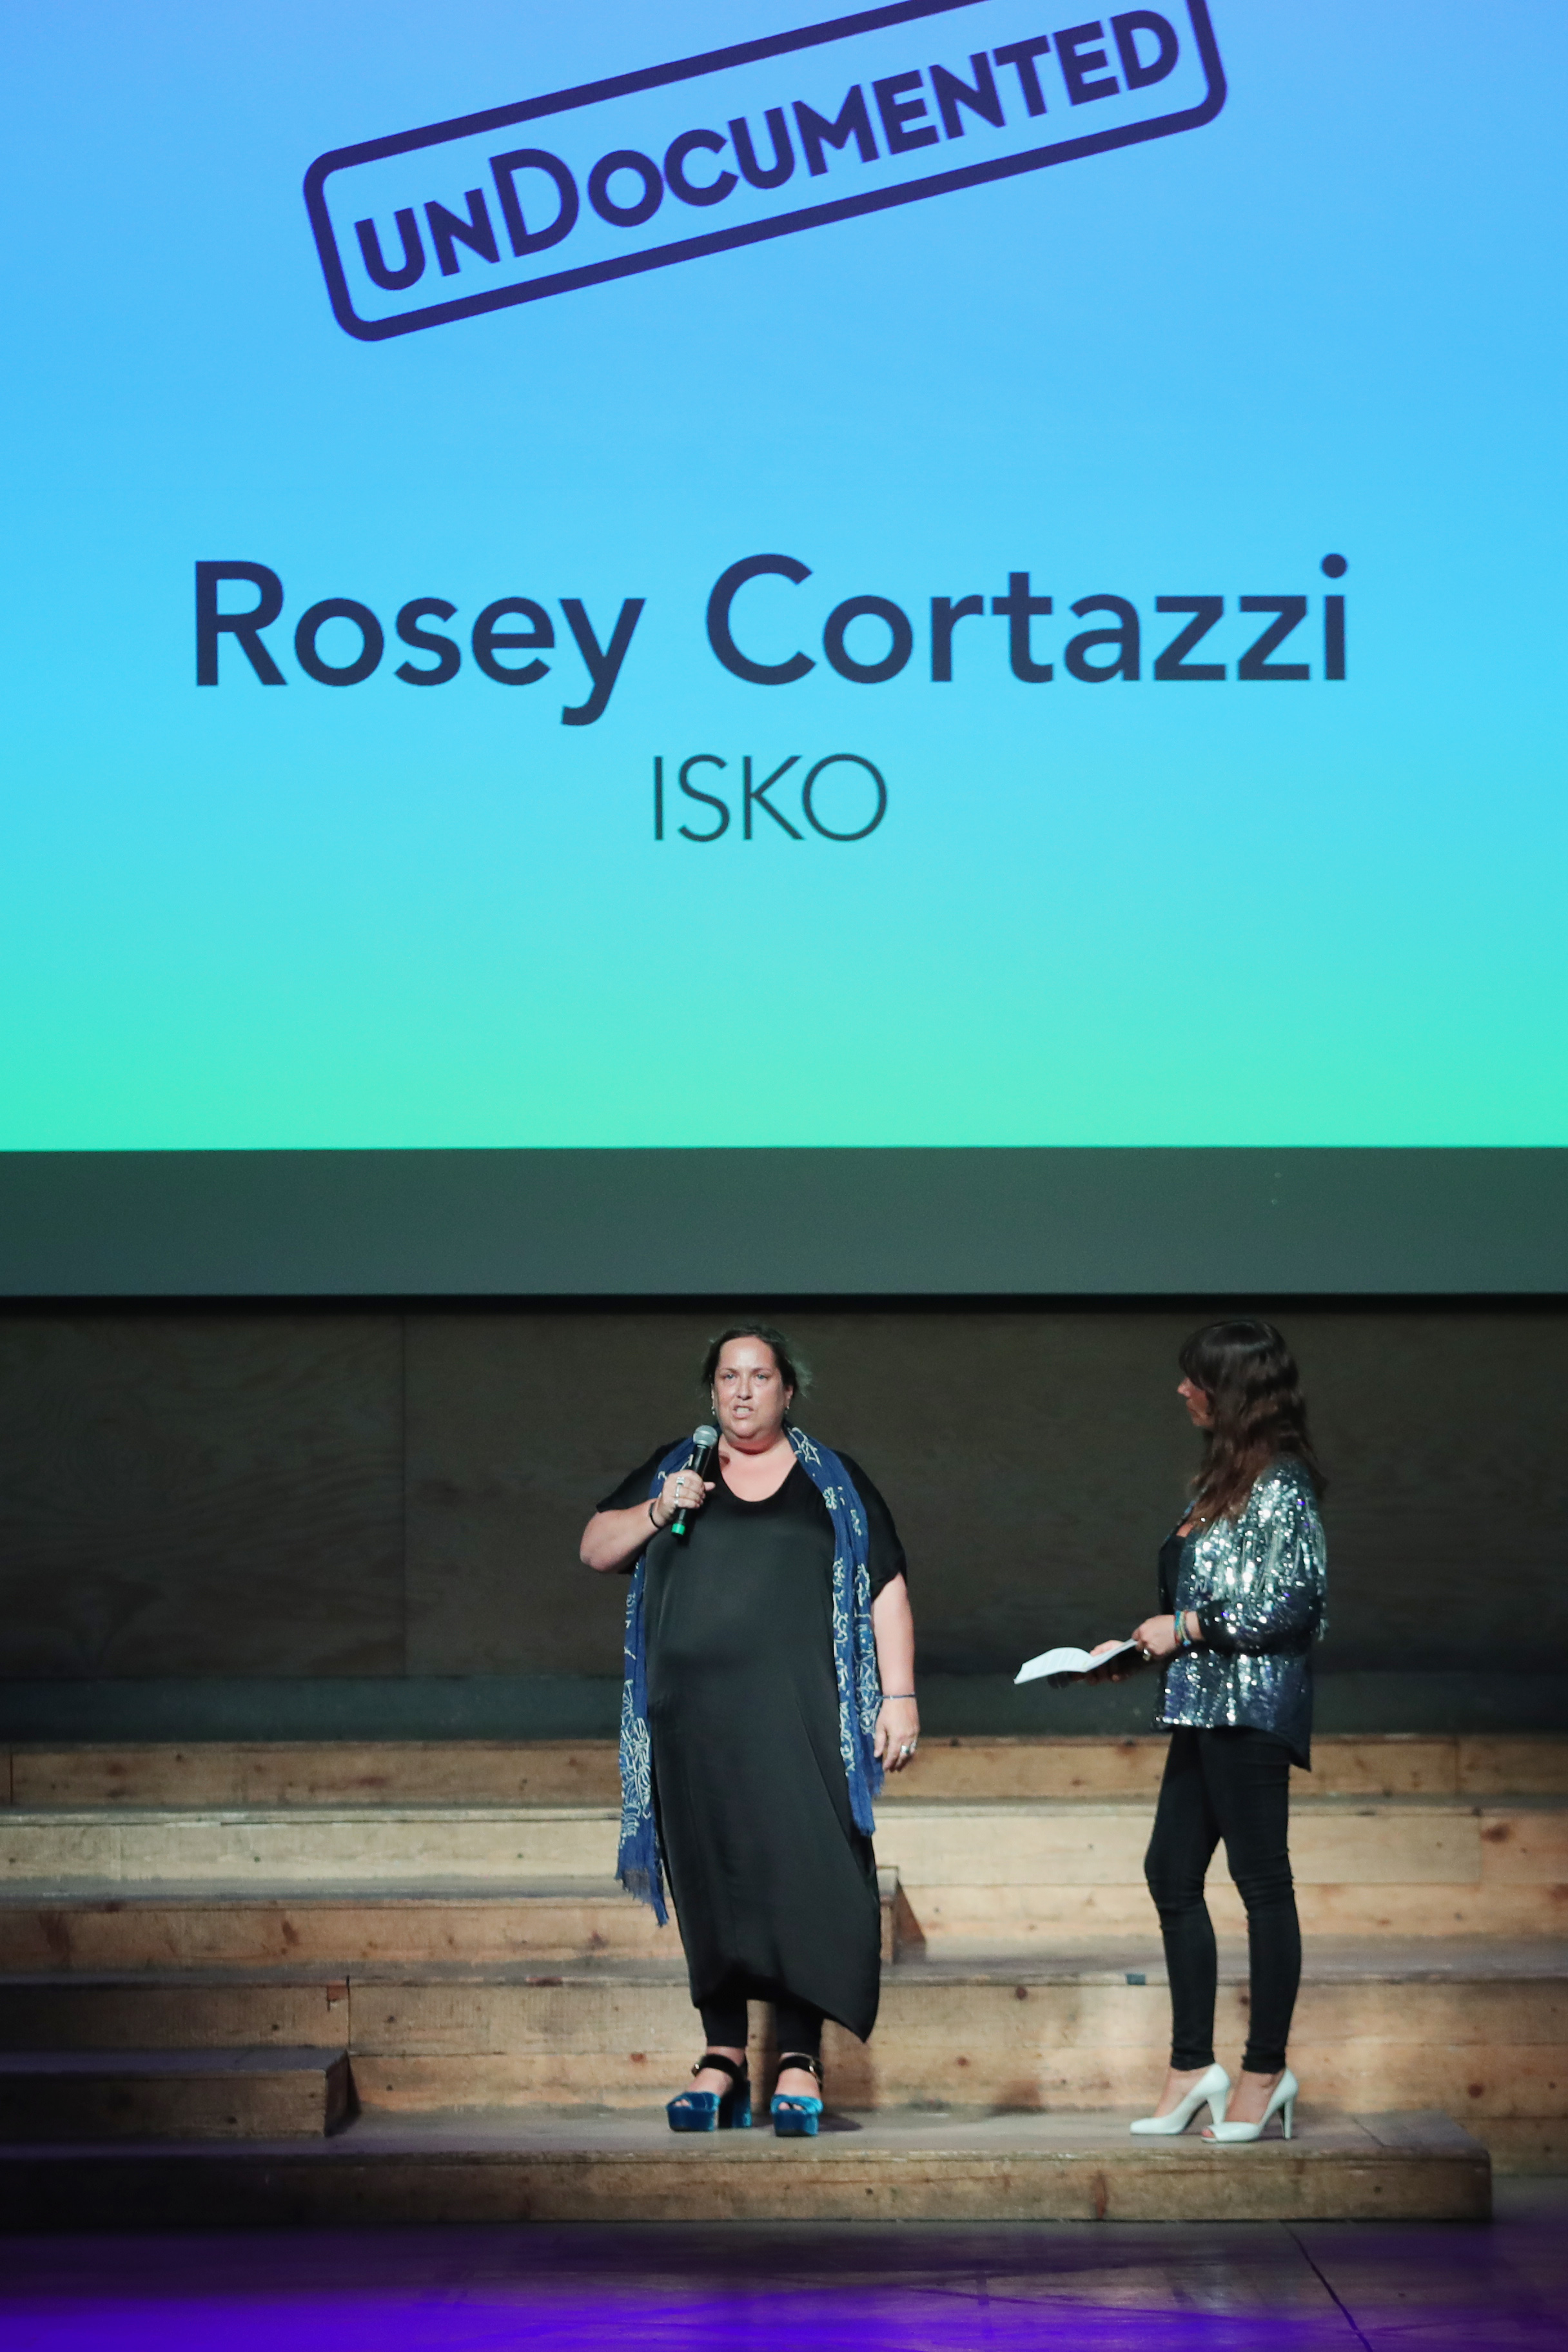 Rosey Cortazzi, ISKO Global Marketing Director